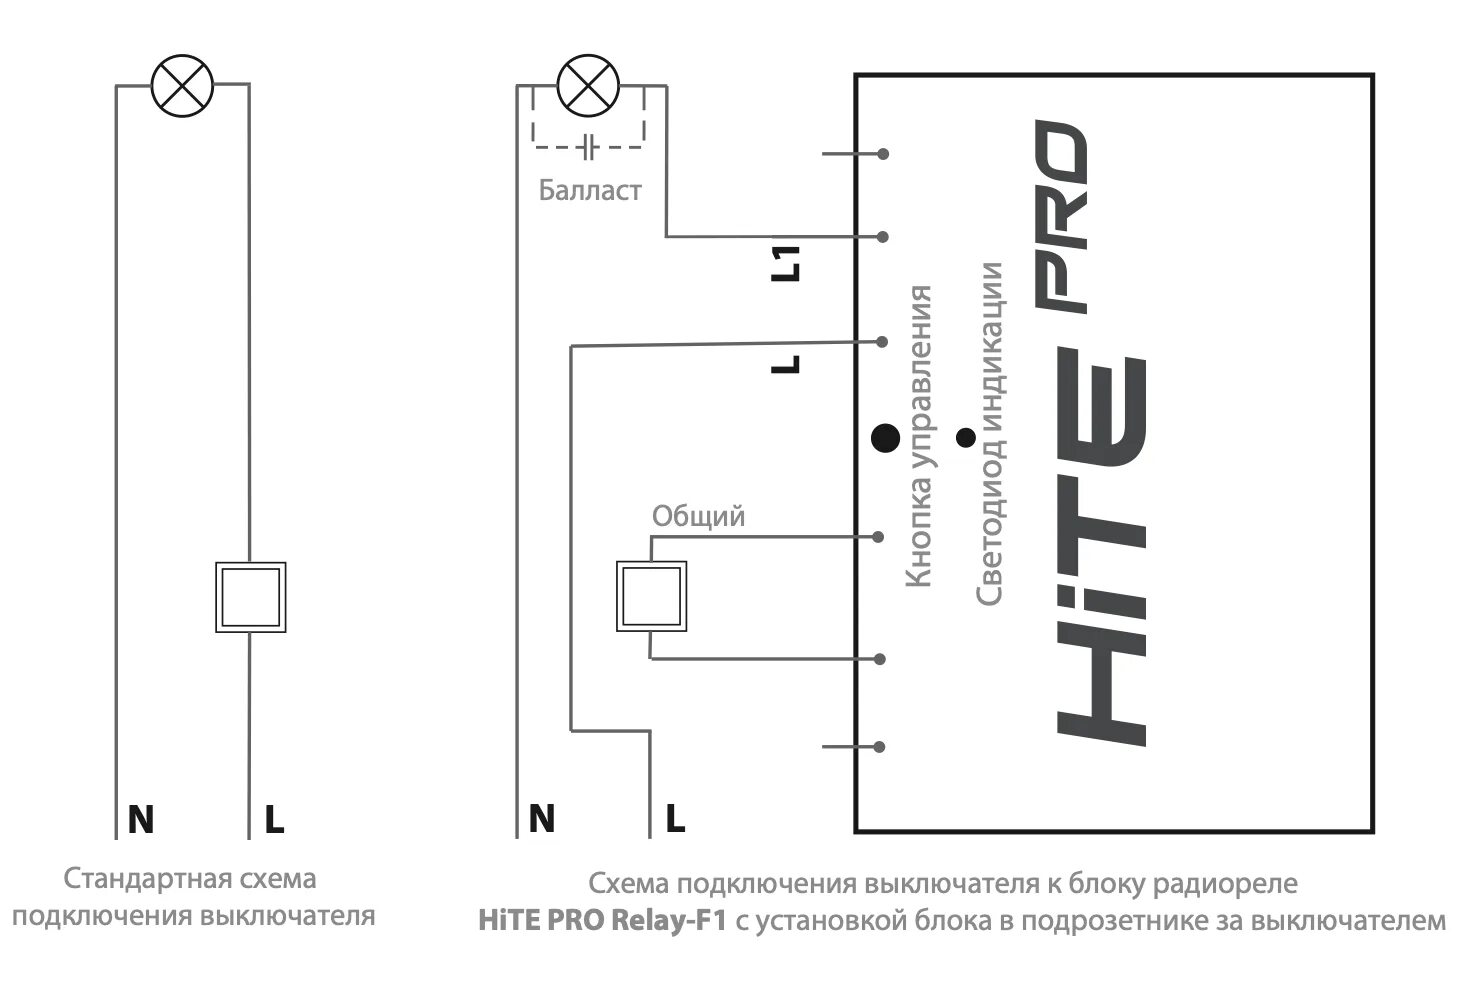 Hitepro. Блок радиореле relay-1. Блок радиореле Hite Pro relay. Hite Pro relay-1. Схема подключения WIFI реле переключателя.